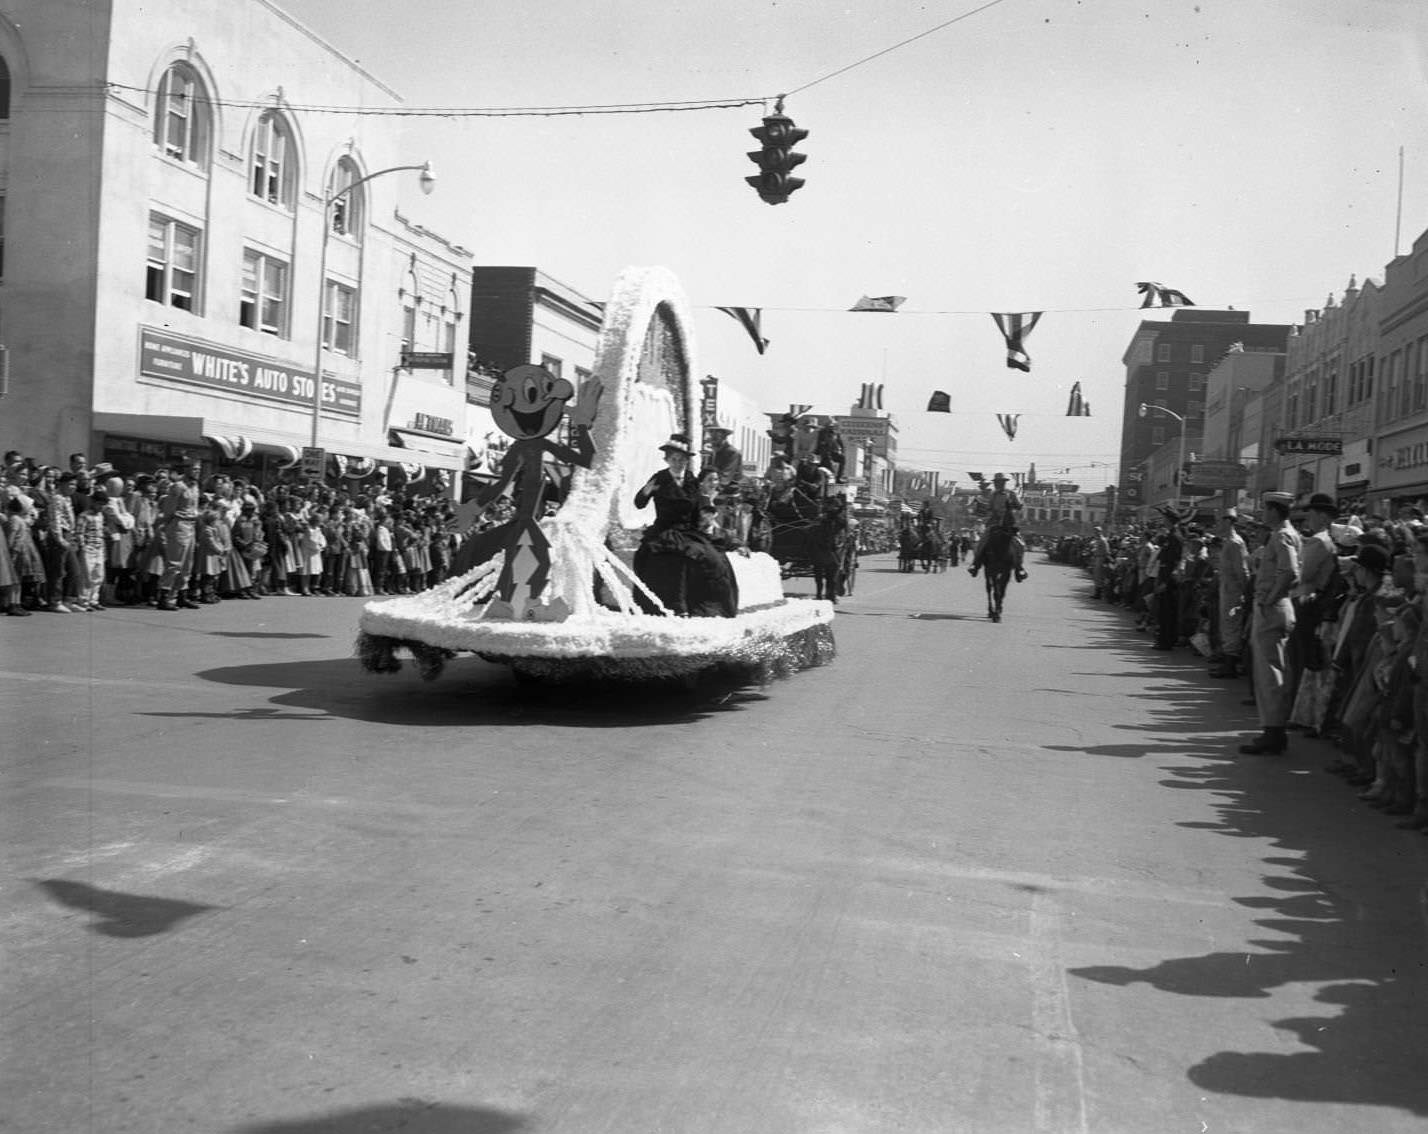 West Texas Utilities Float in Parade, 1956